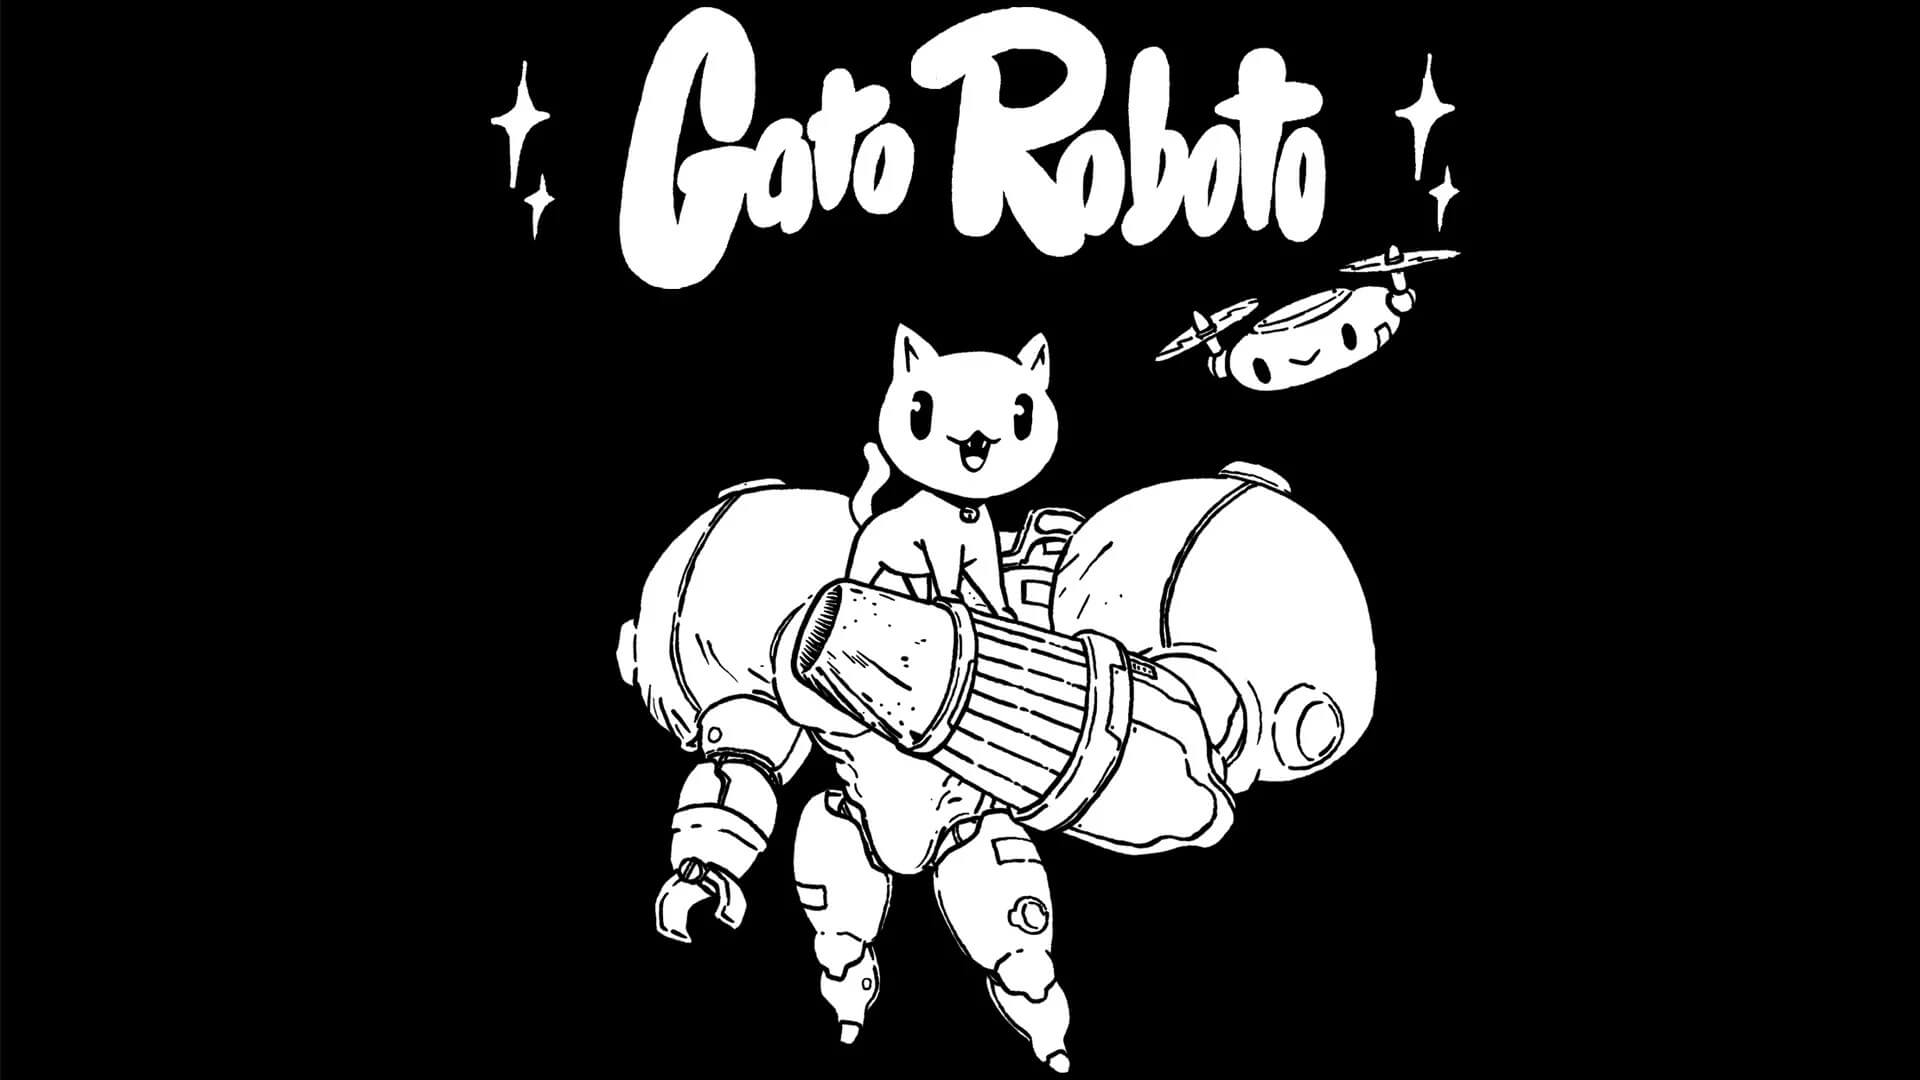 Gato Roboto Review